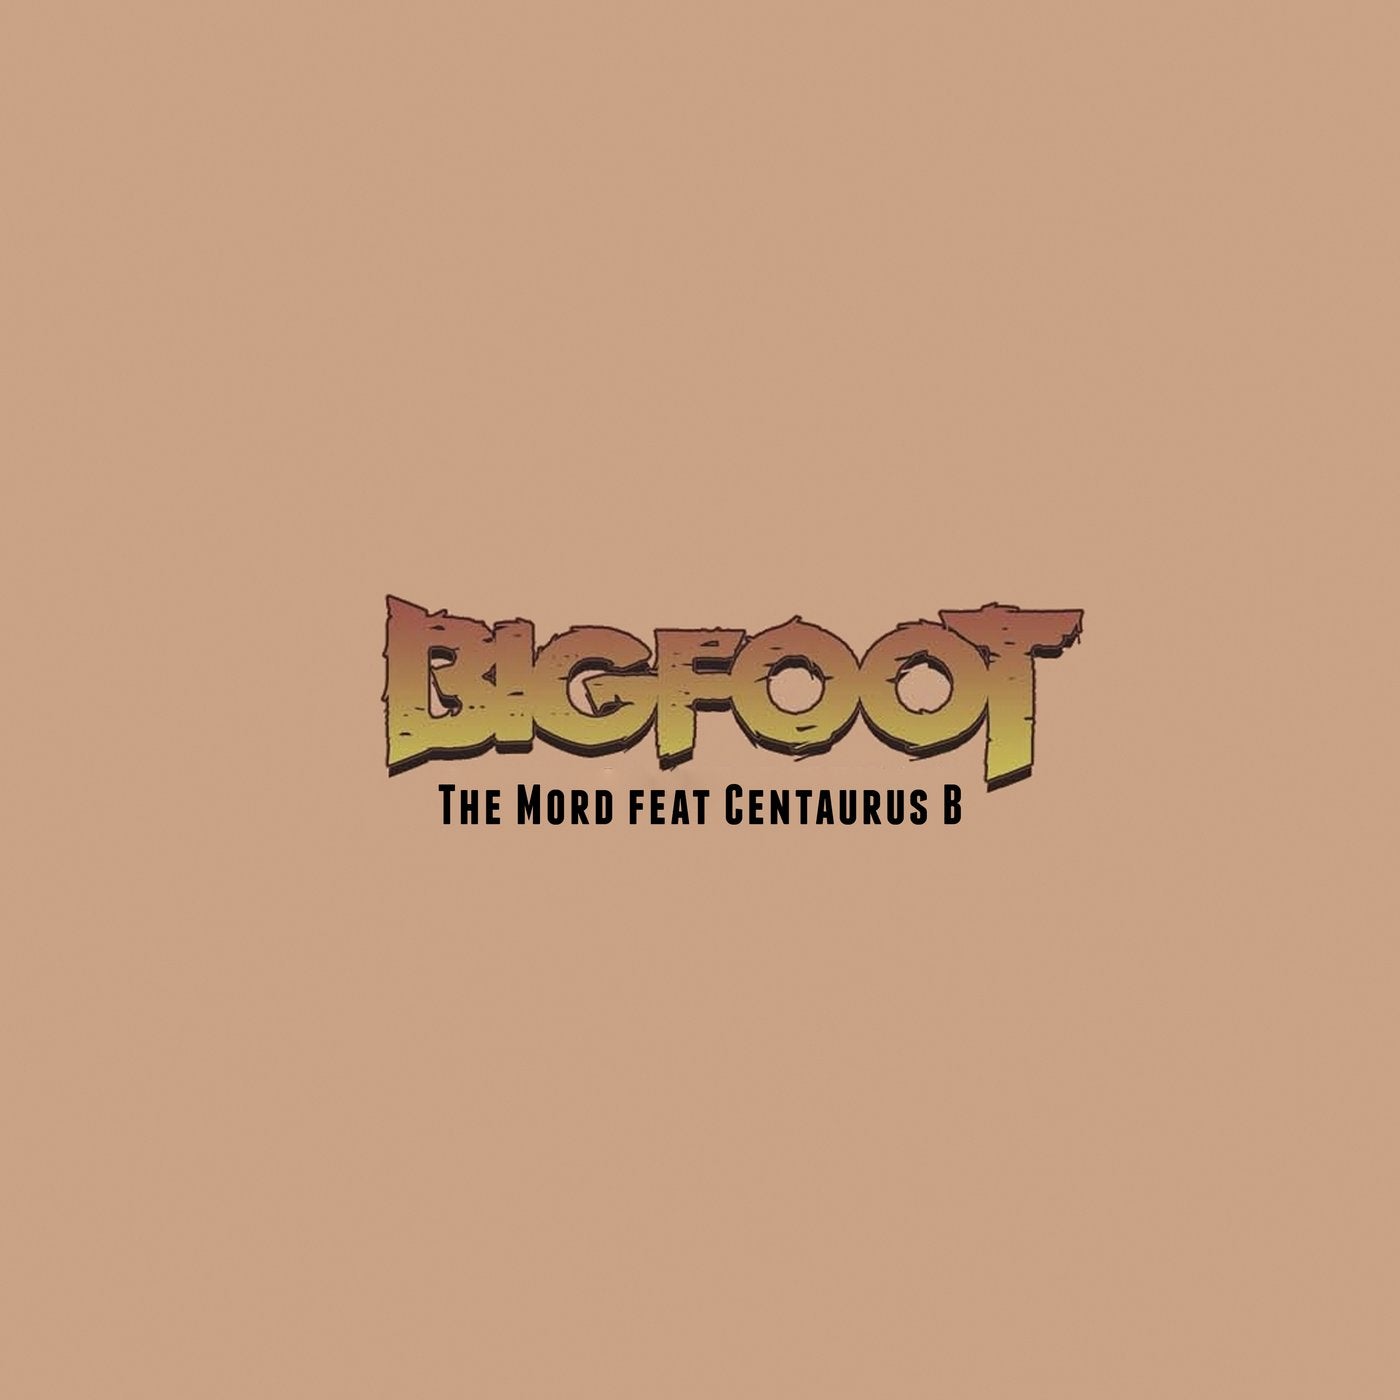 Bigfoot - Single